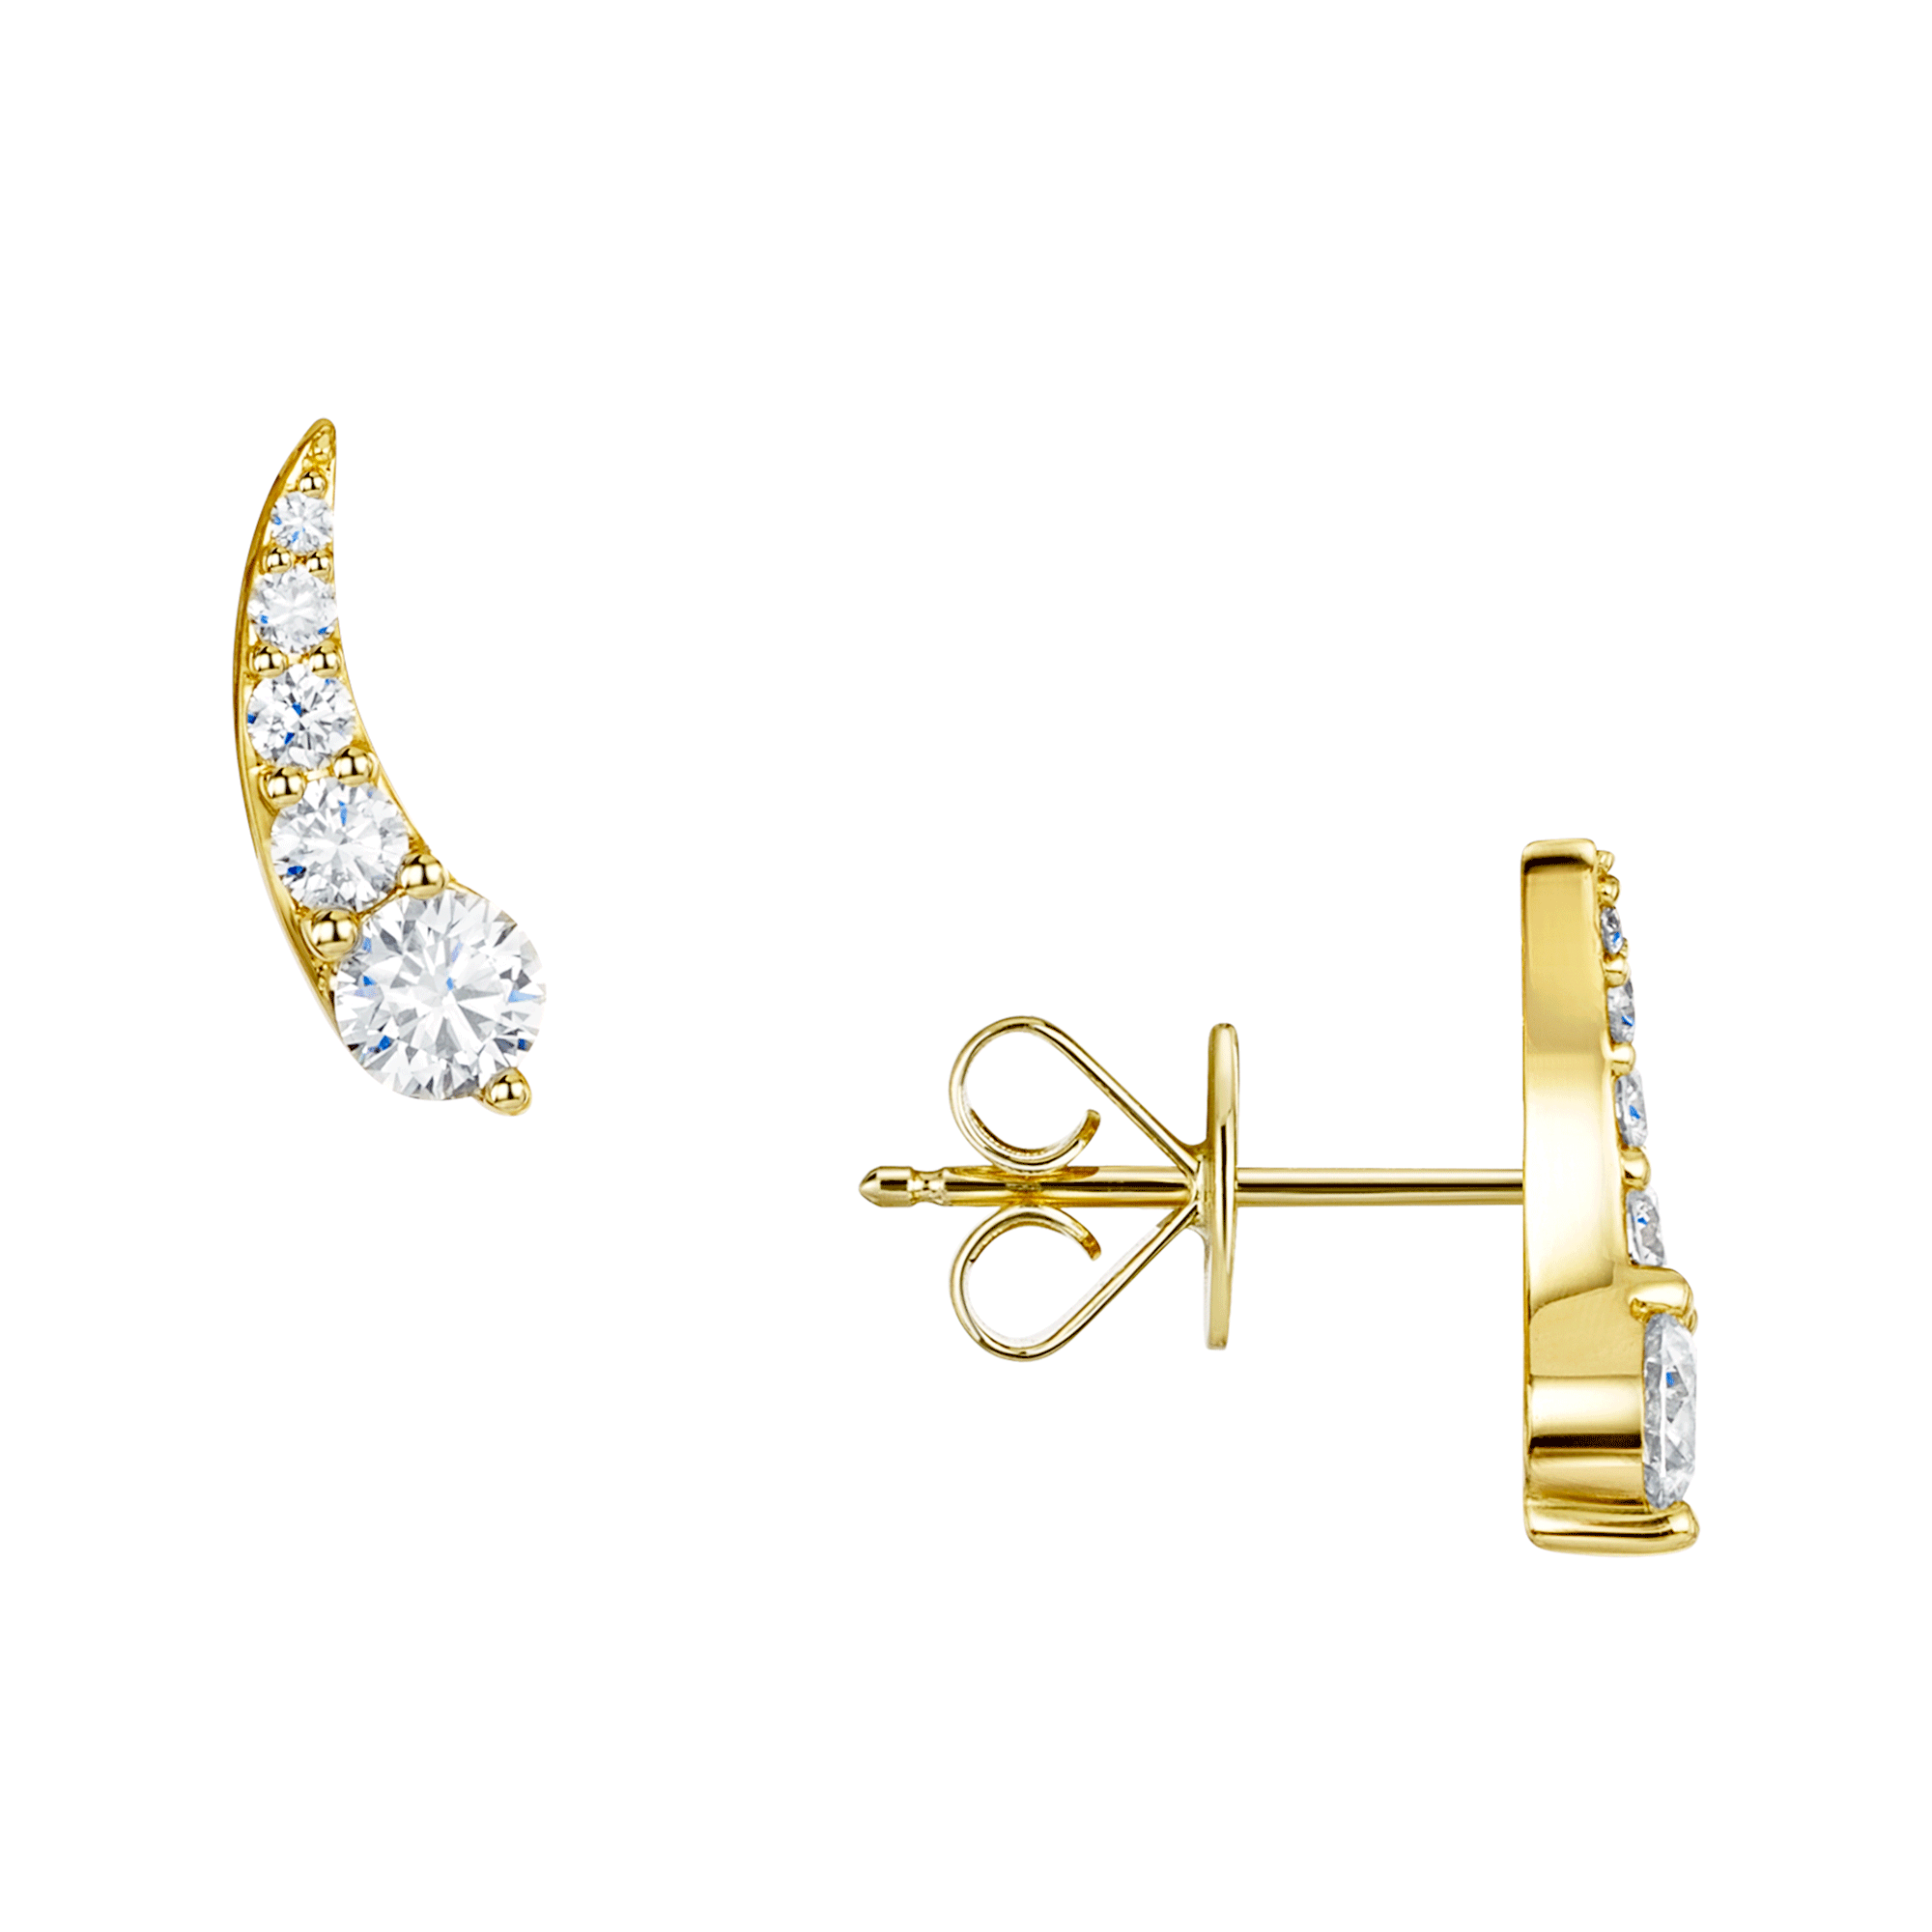 OPEIA Nova Collection 18ct Yellow Gold Round Brilliant Cut Diamond Earrings